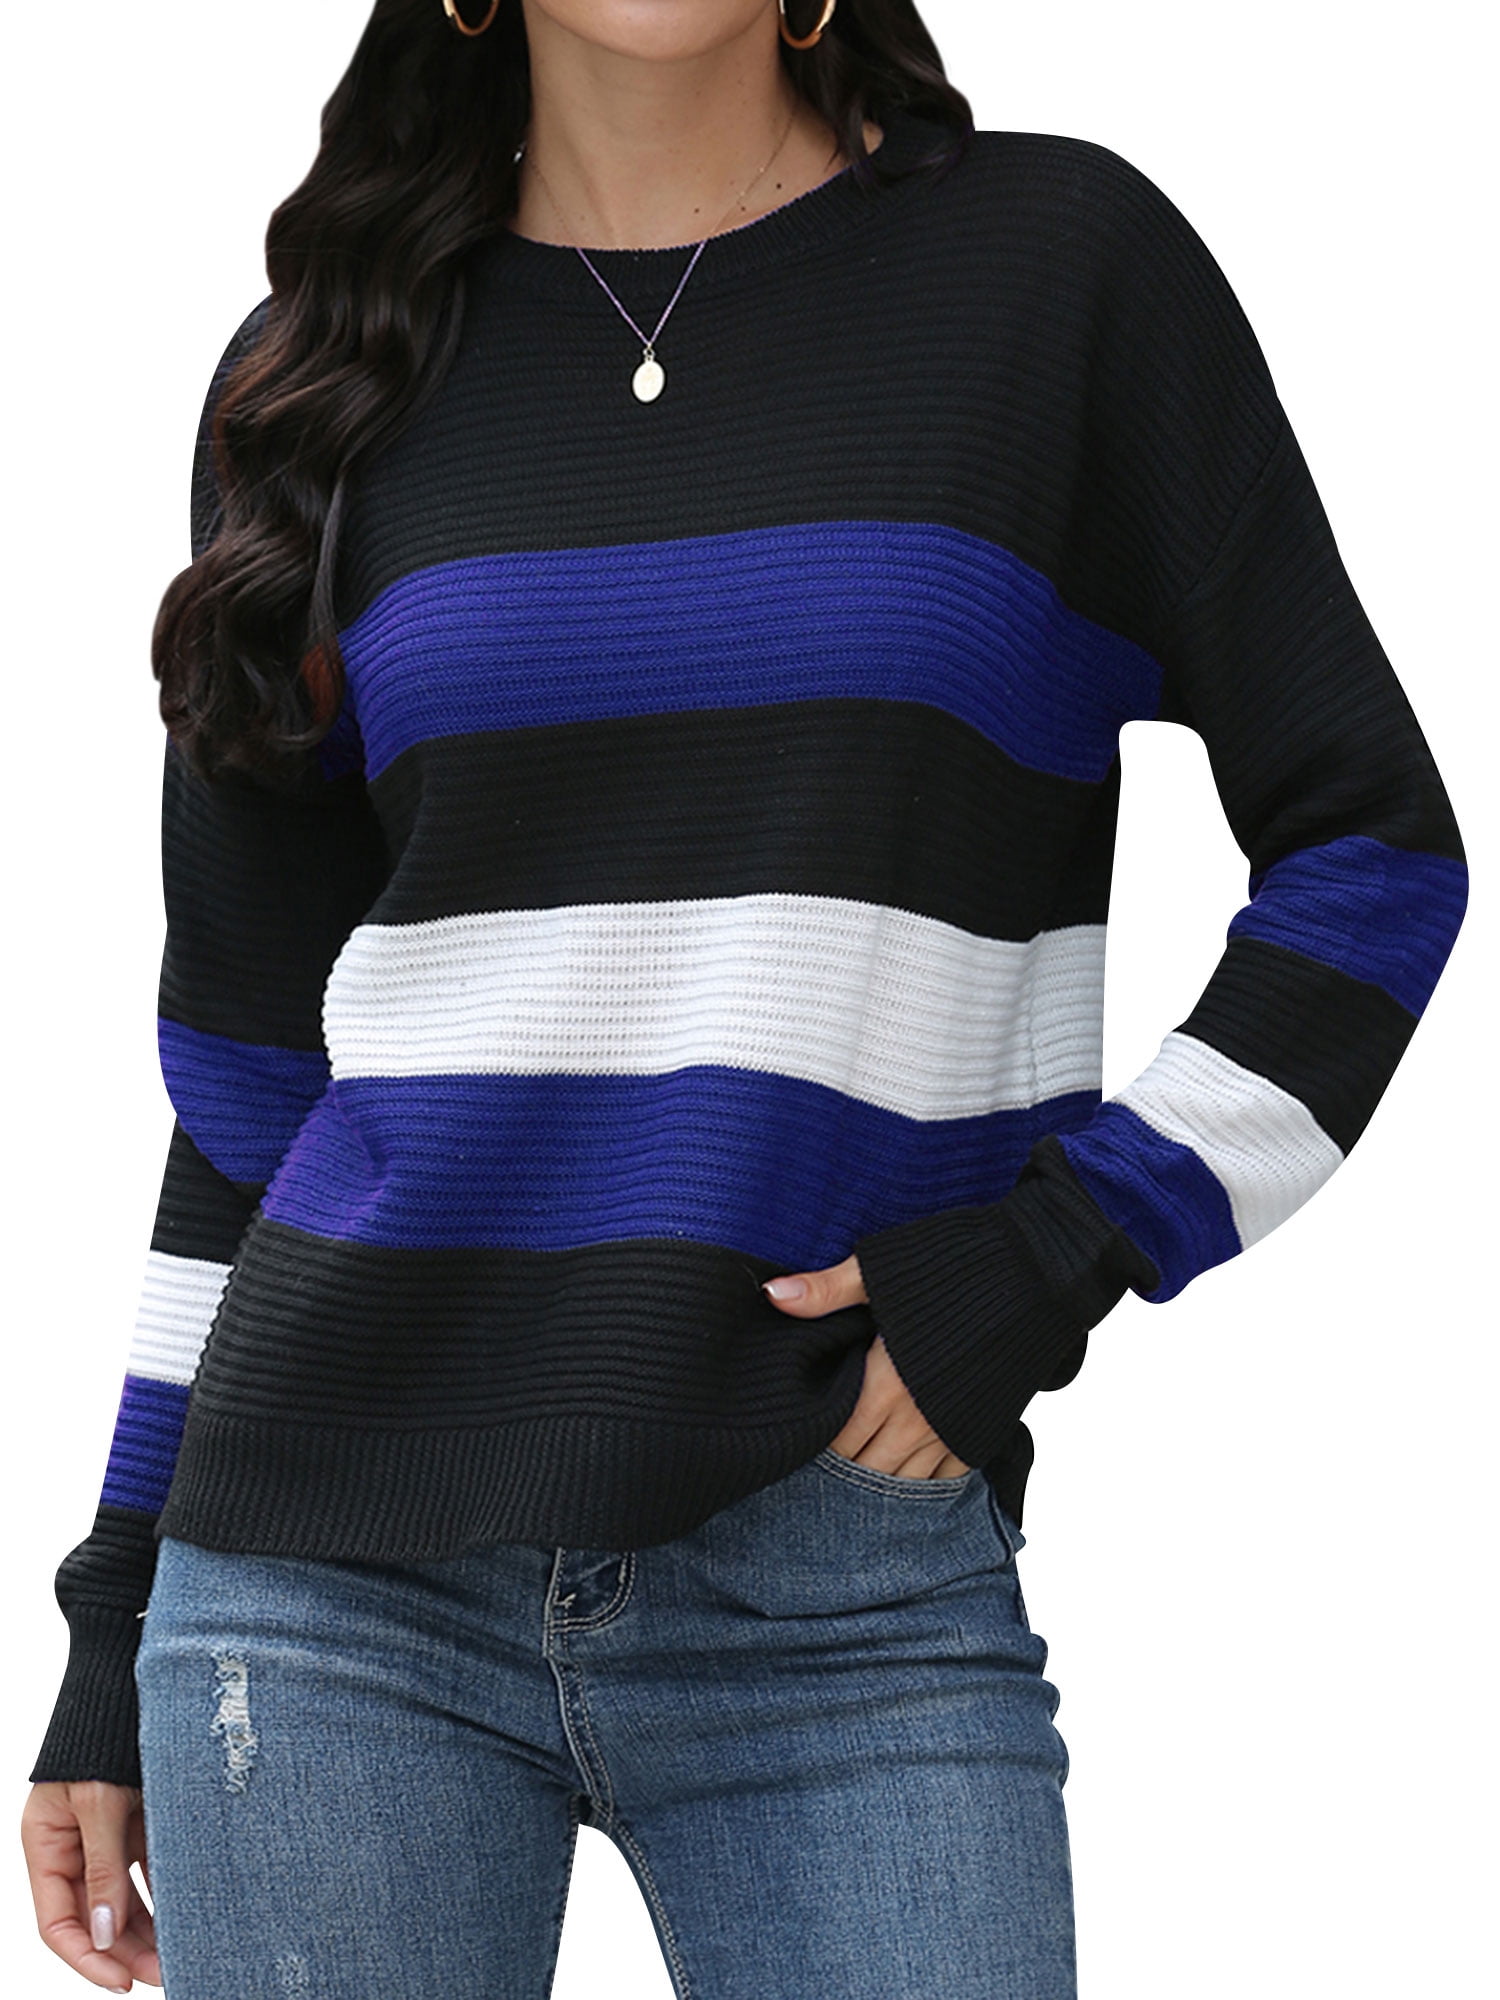 HUBERY Women Colorblock Stripe Crew Neck Long Sleeve Sweater - Walmart.com